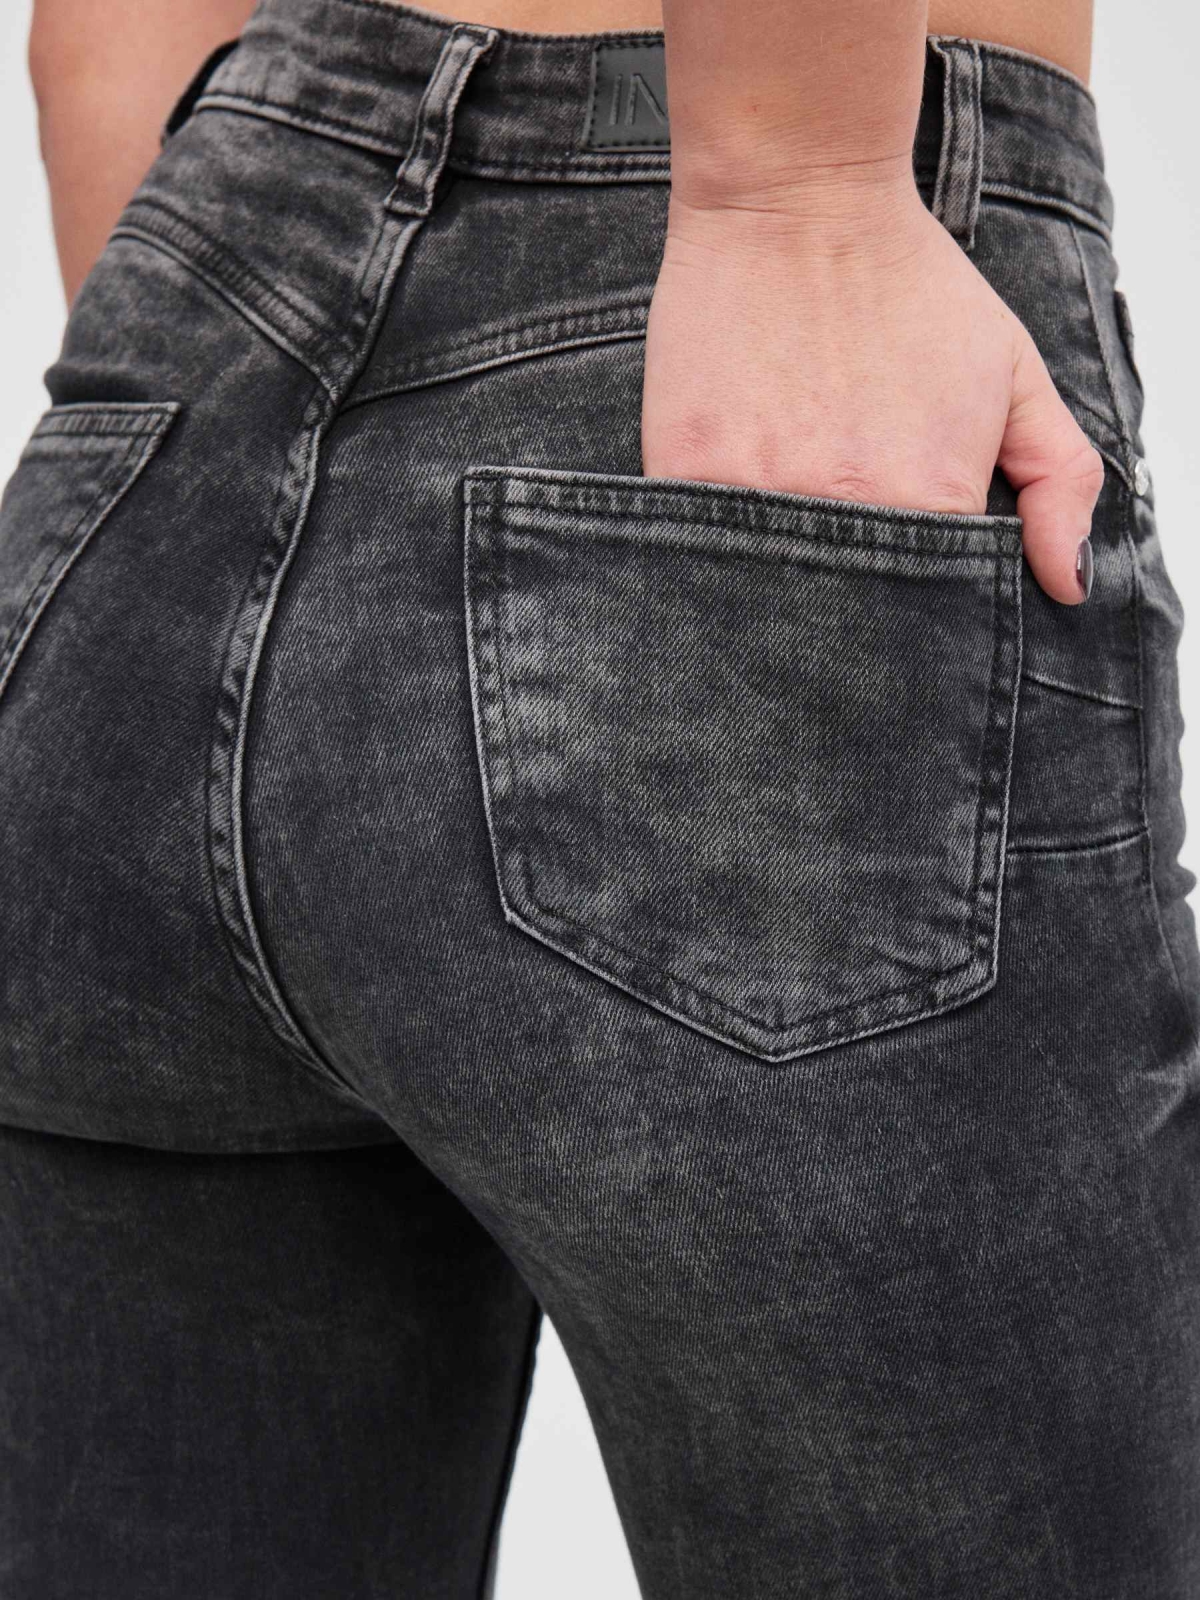 Skinny jeans push up black detail view